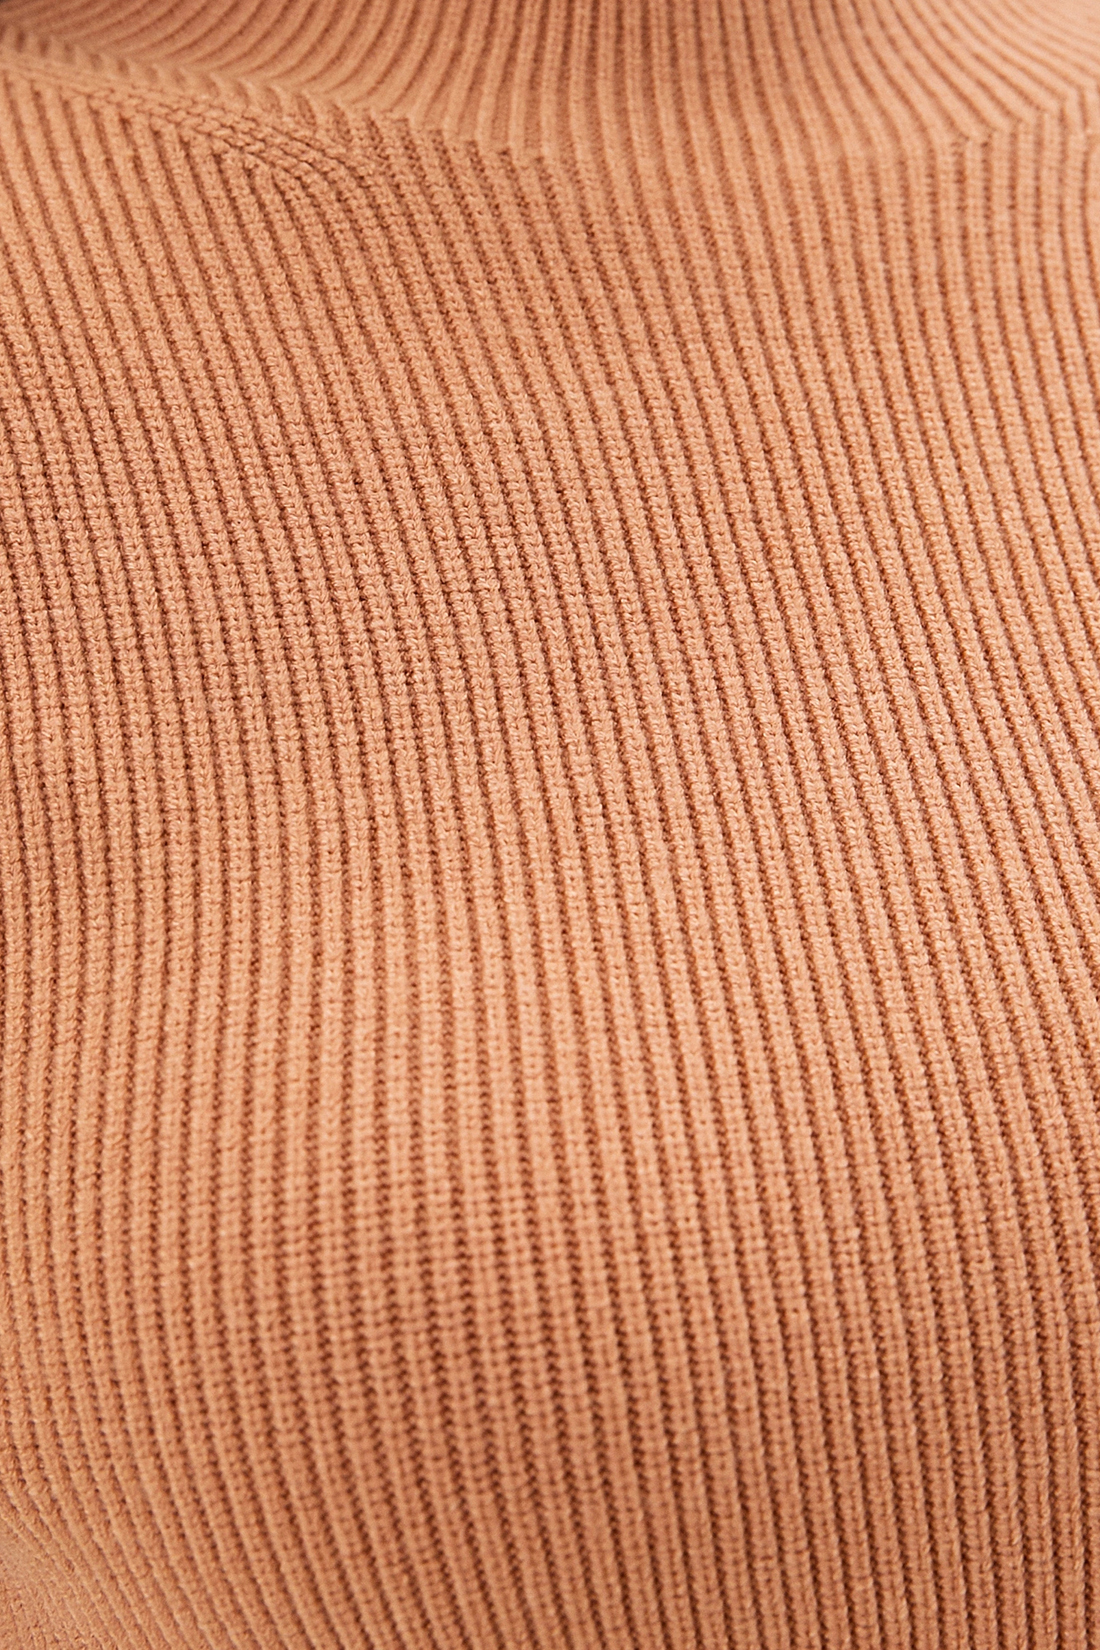 Джемпер (арт. baon B130543), размер S, цвет бежевый Джемпер (арт. baon B130543) - фото 3